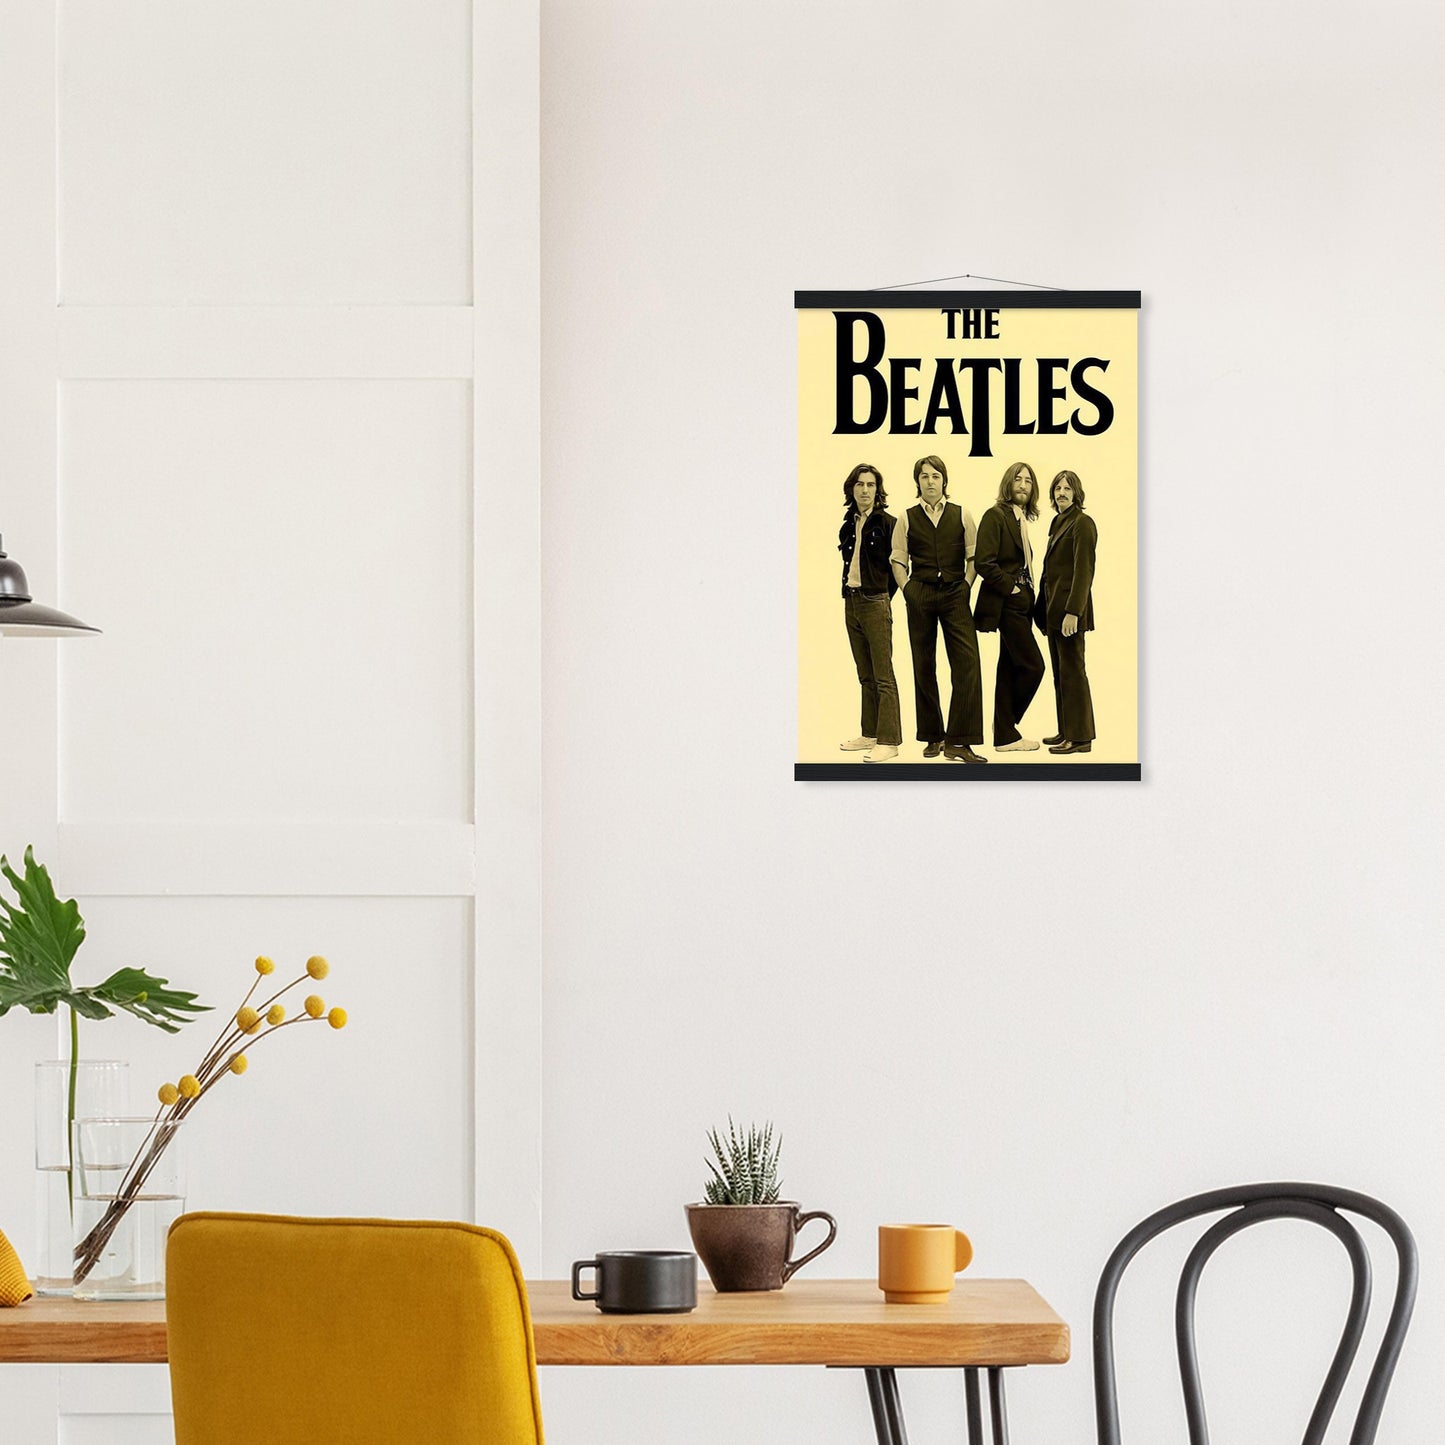 The Beatles Vintage Poster Reprint on Premium Matte Paper - Posterify